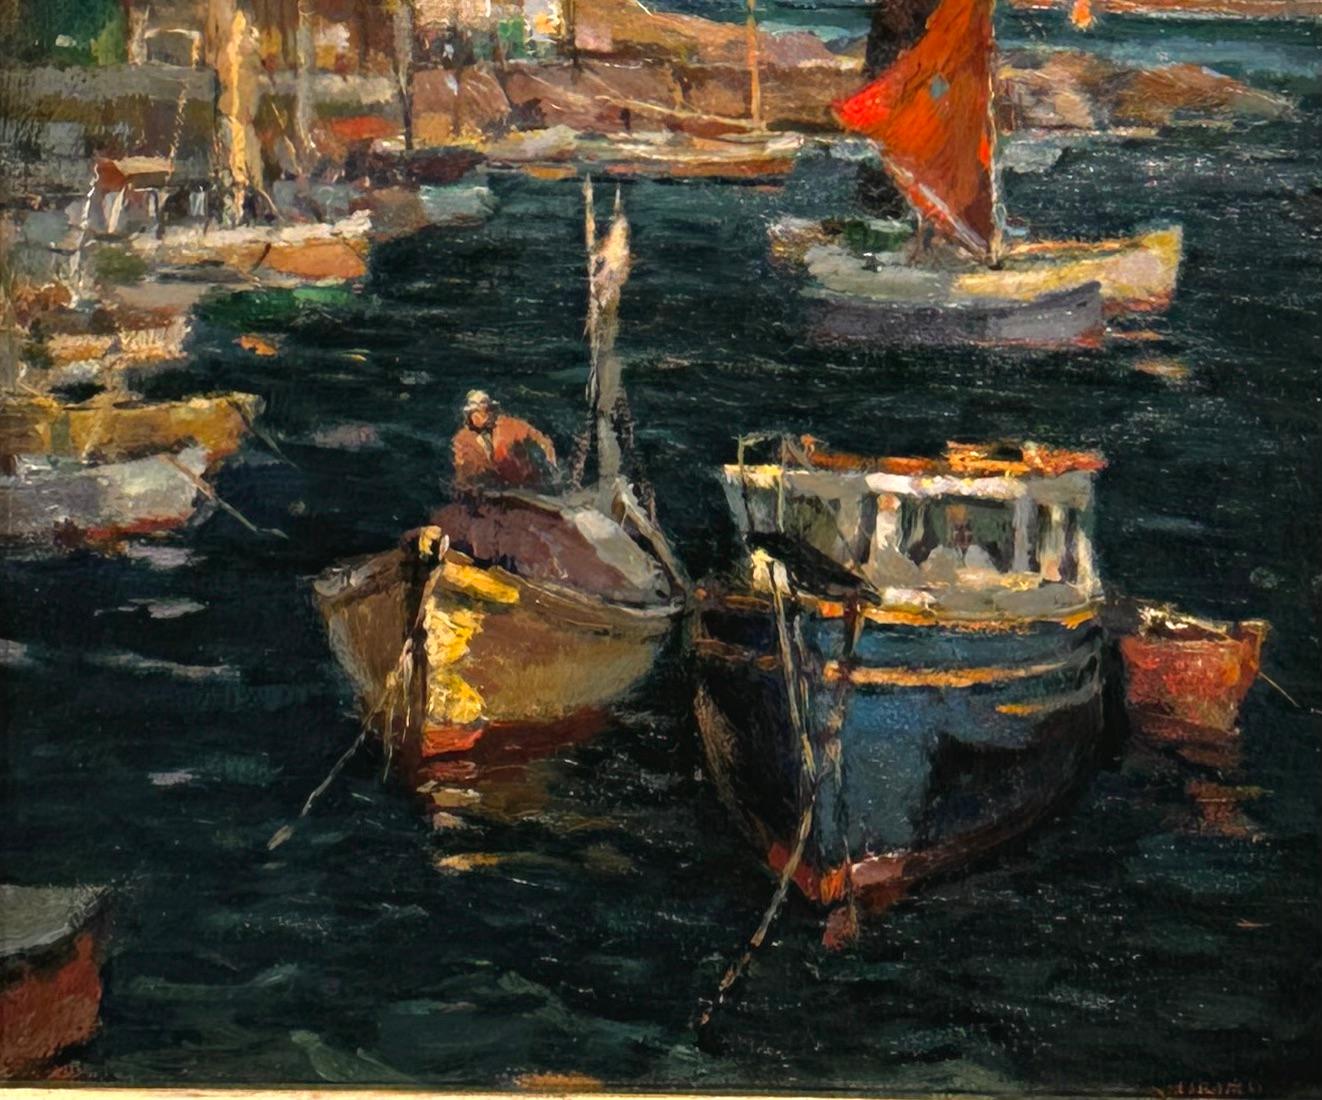 Antonio Cirino Landscape Painting - "Last Ray of Sun", Seascape, Fishing Boats, Cape Ann Cove, Colorful Oil Painting